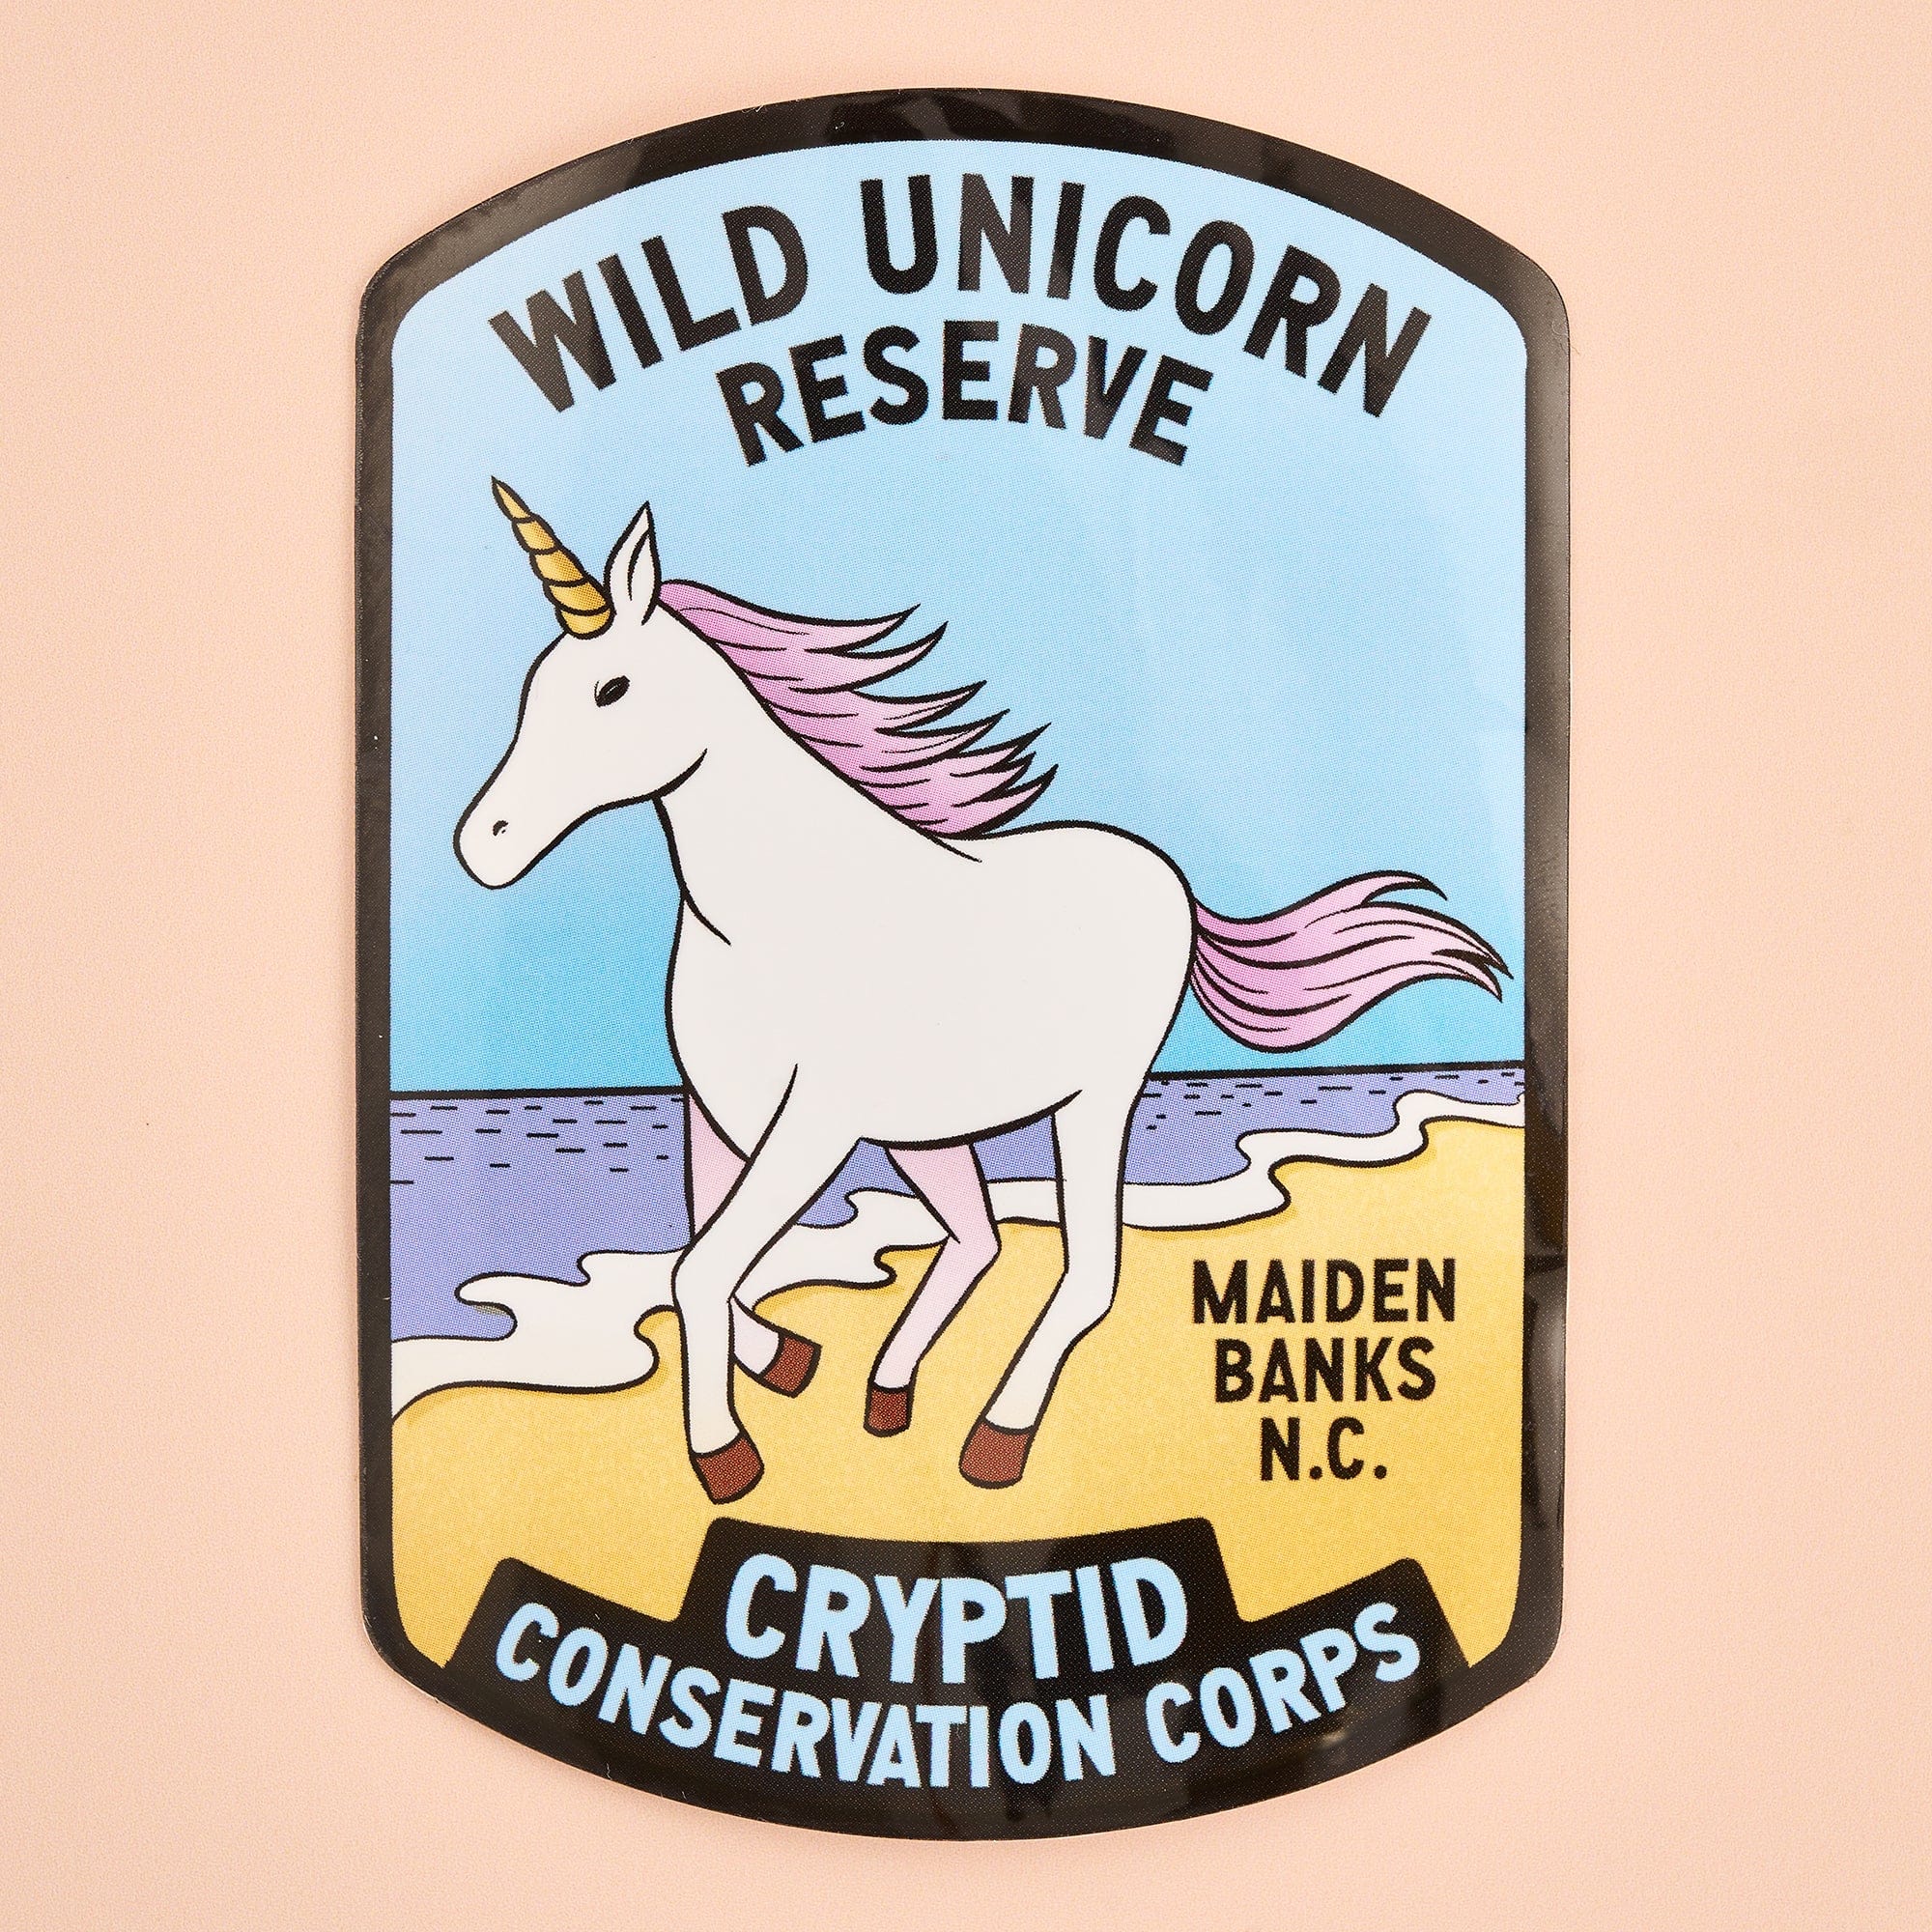 Cryptid Conservation Corps: Three sticker set